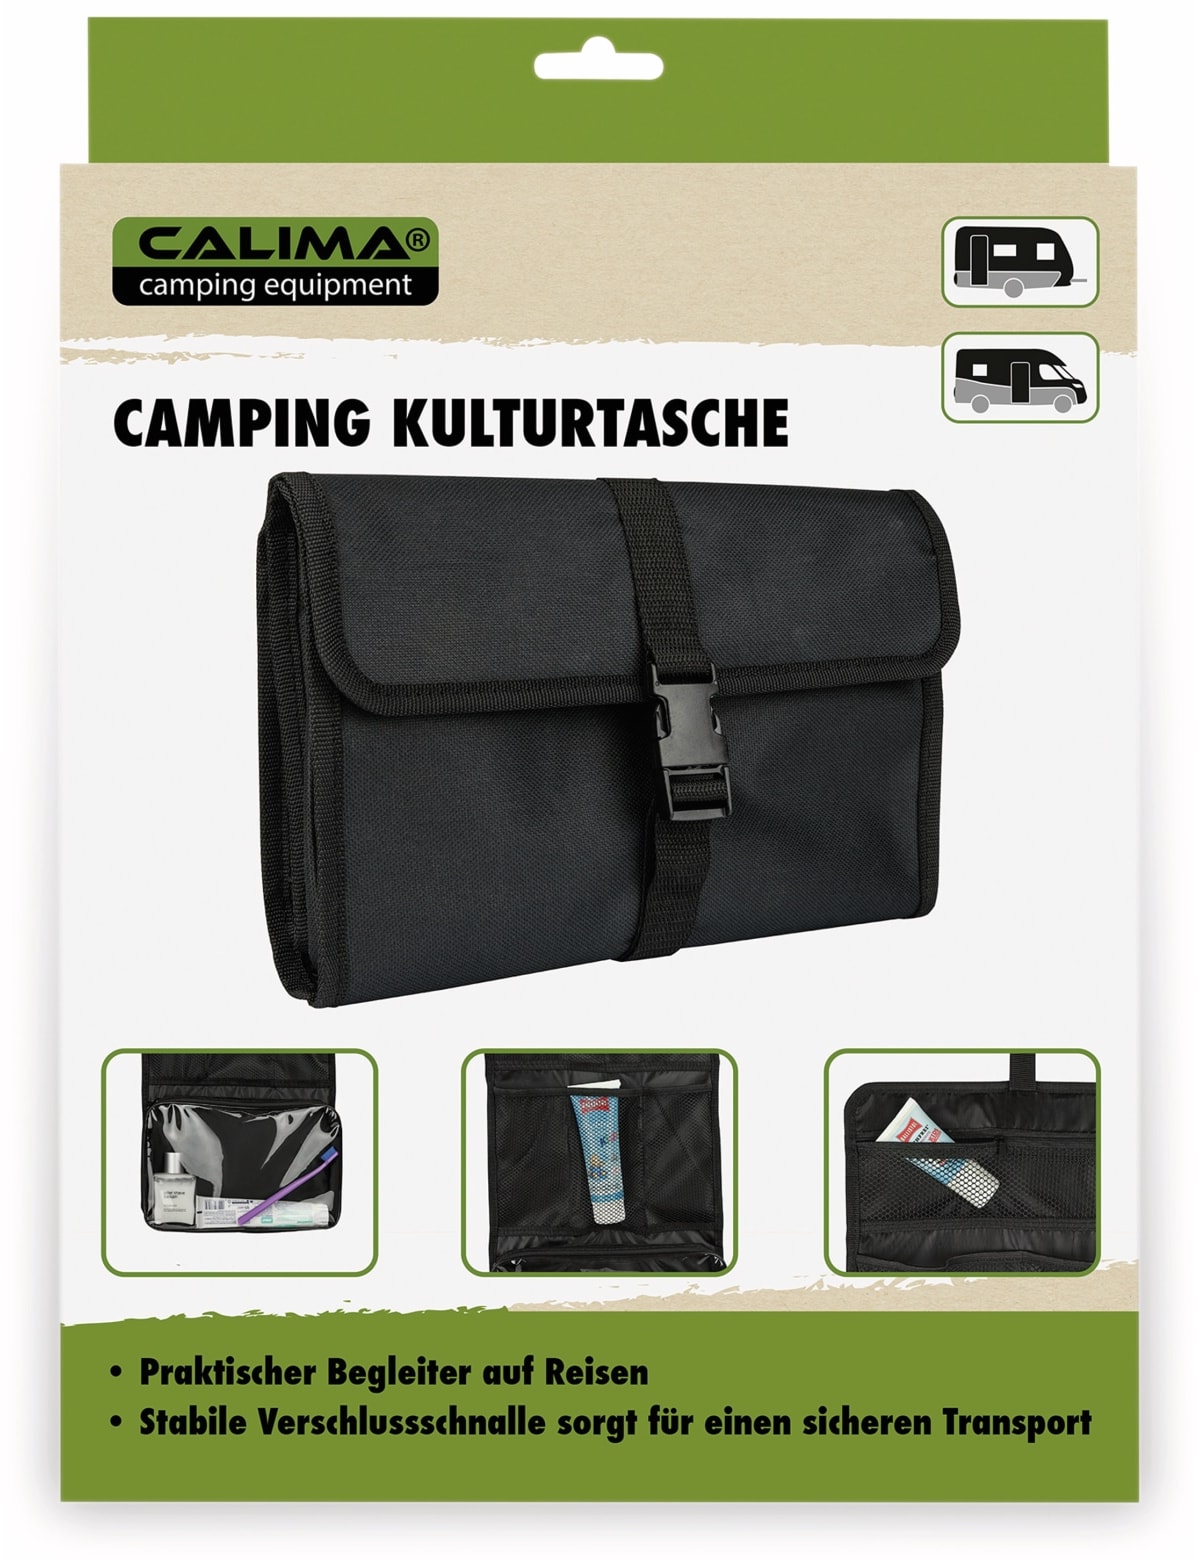 CALIMA CAMPING EQUIPMENT Camping Kulturtasche